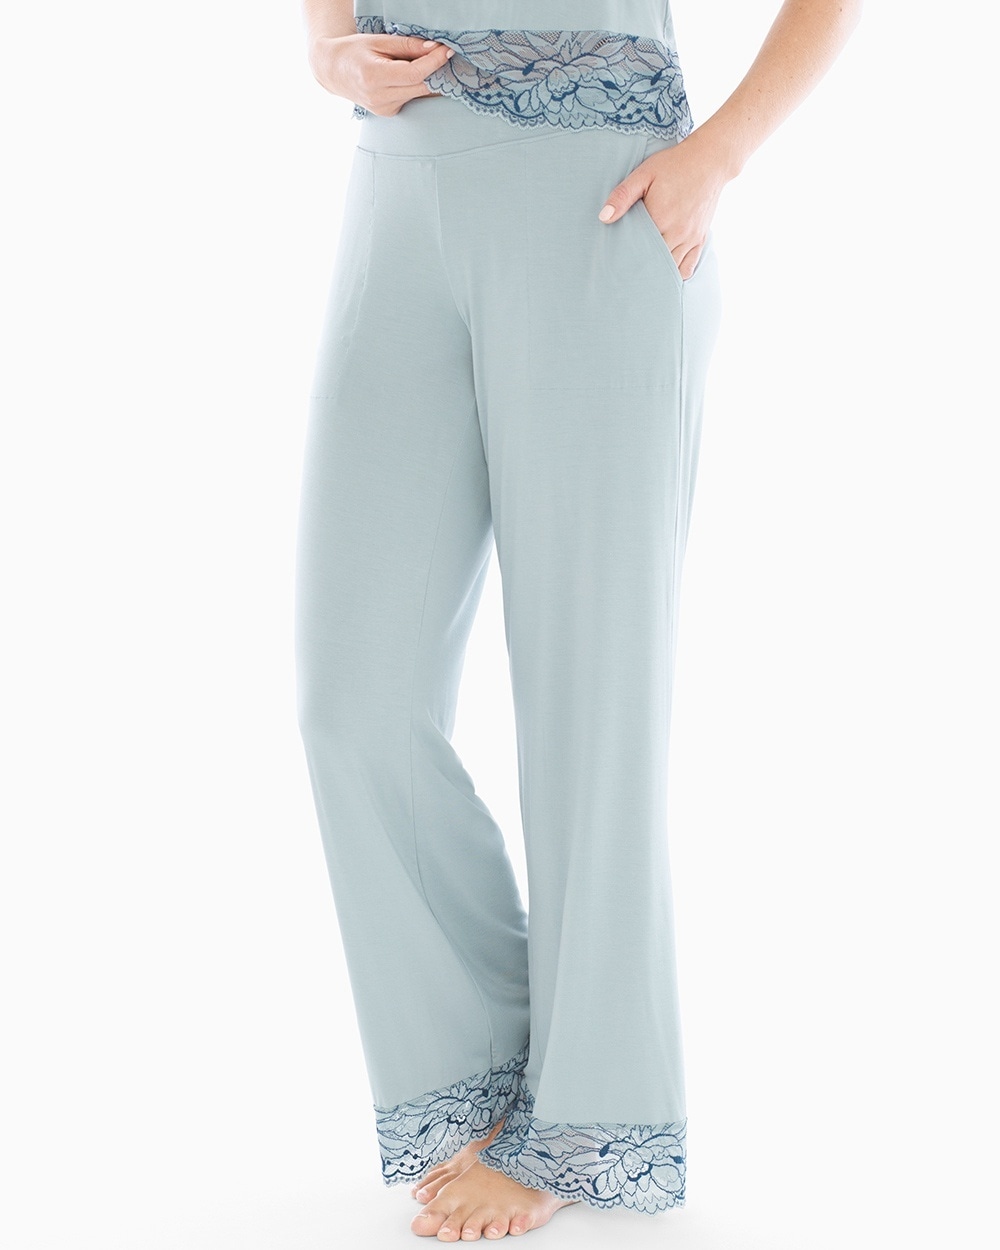 Cool Nights Lace Trim Pajama Pants Slated